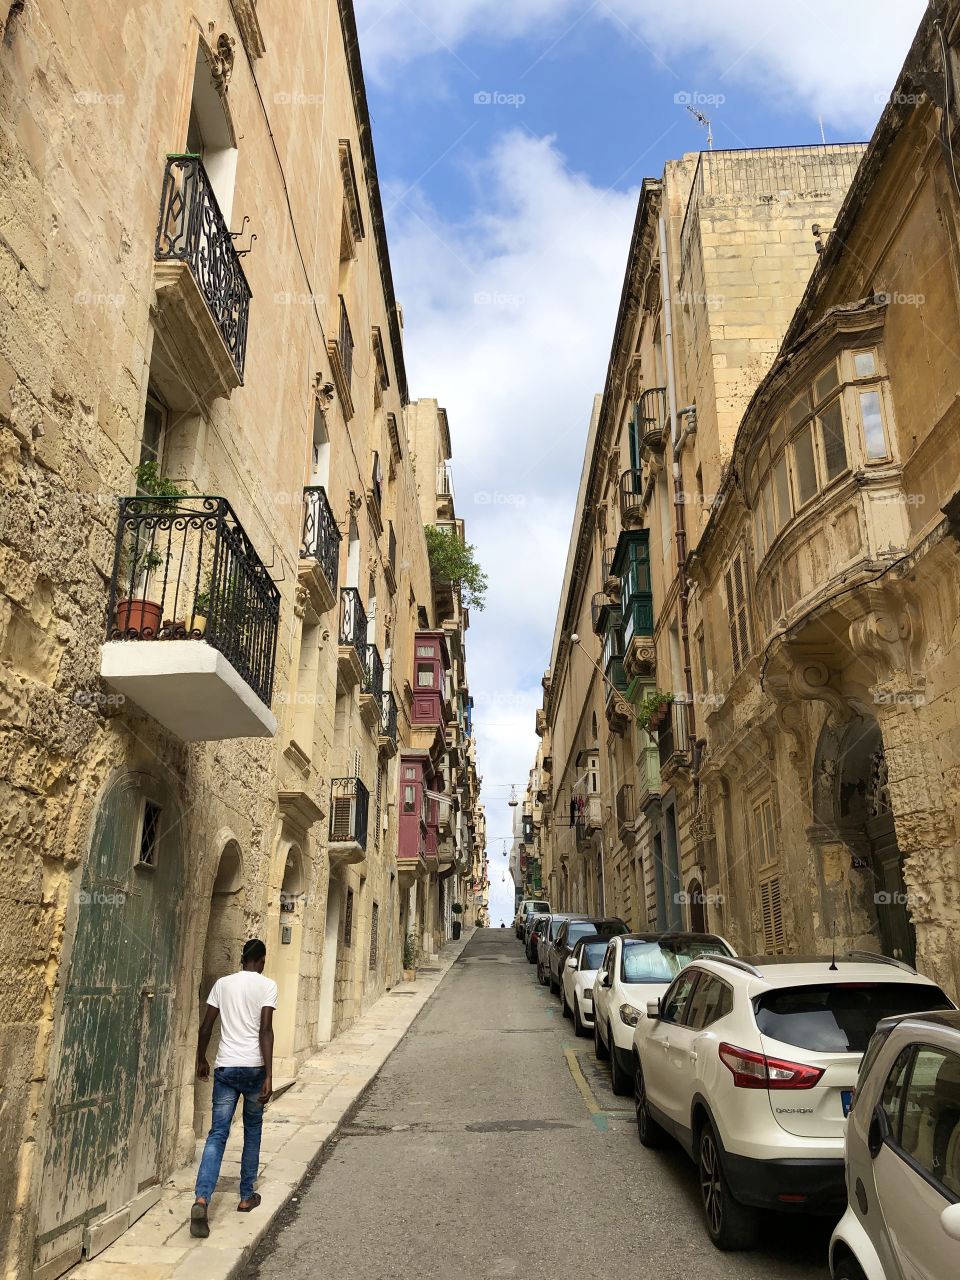 Exploring an ally at Malta